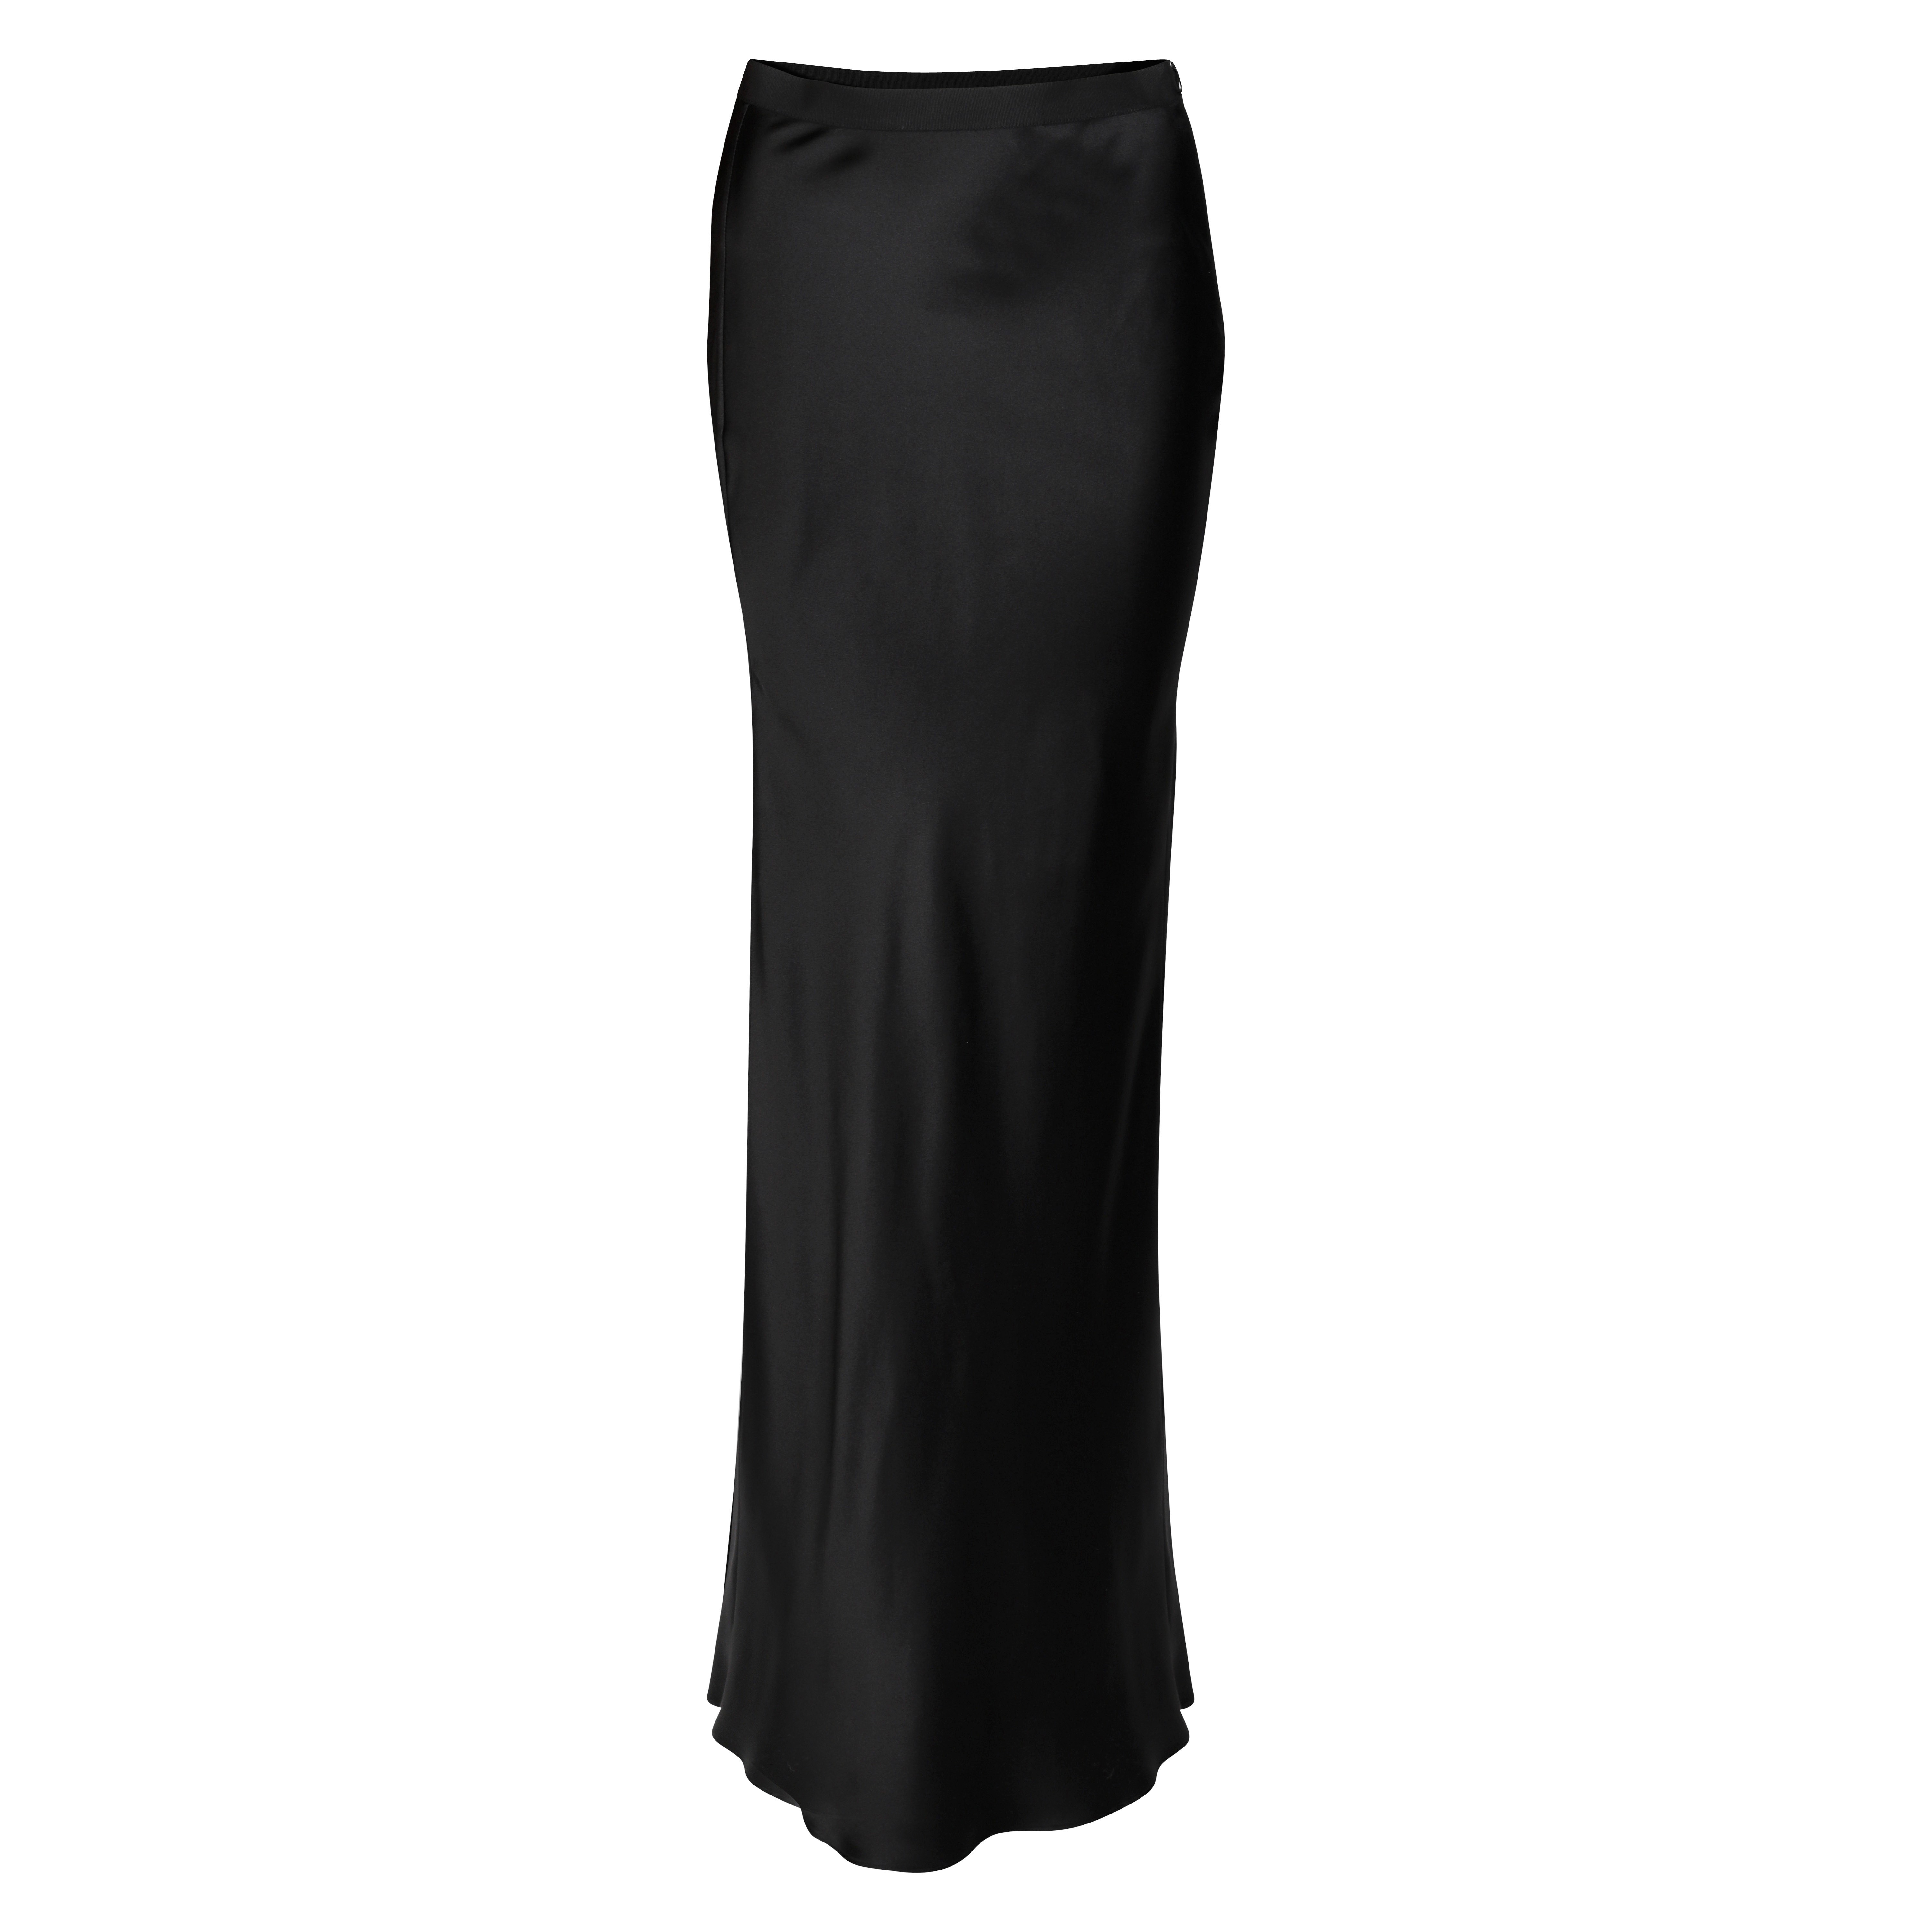 NILI LOTAN Azalea Skirt in Black Silk